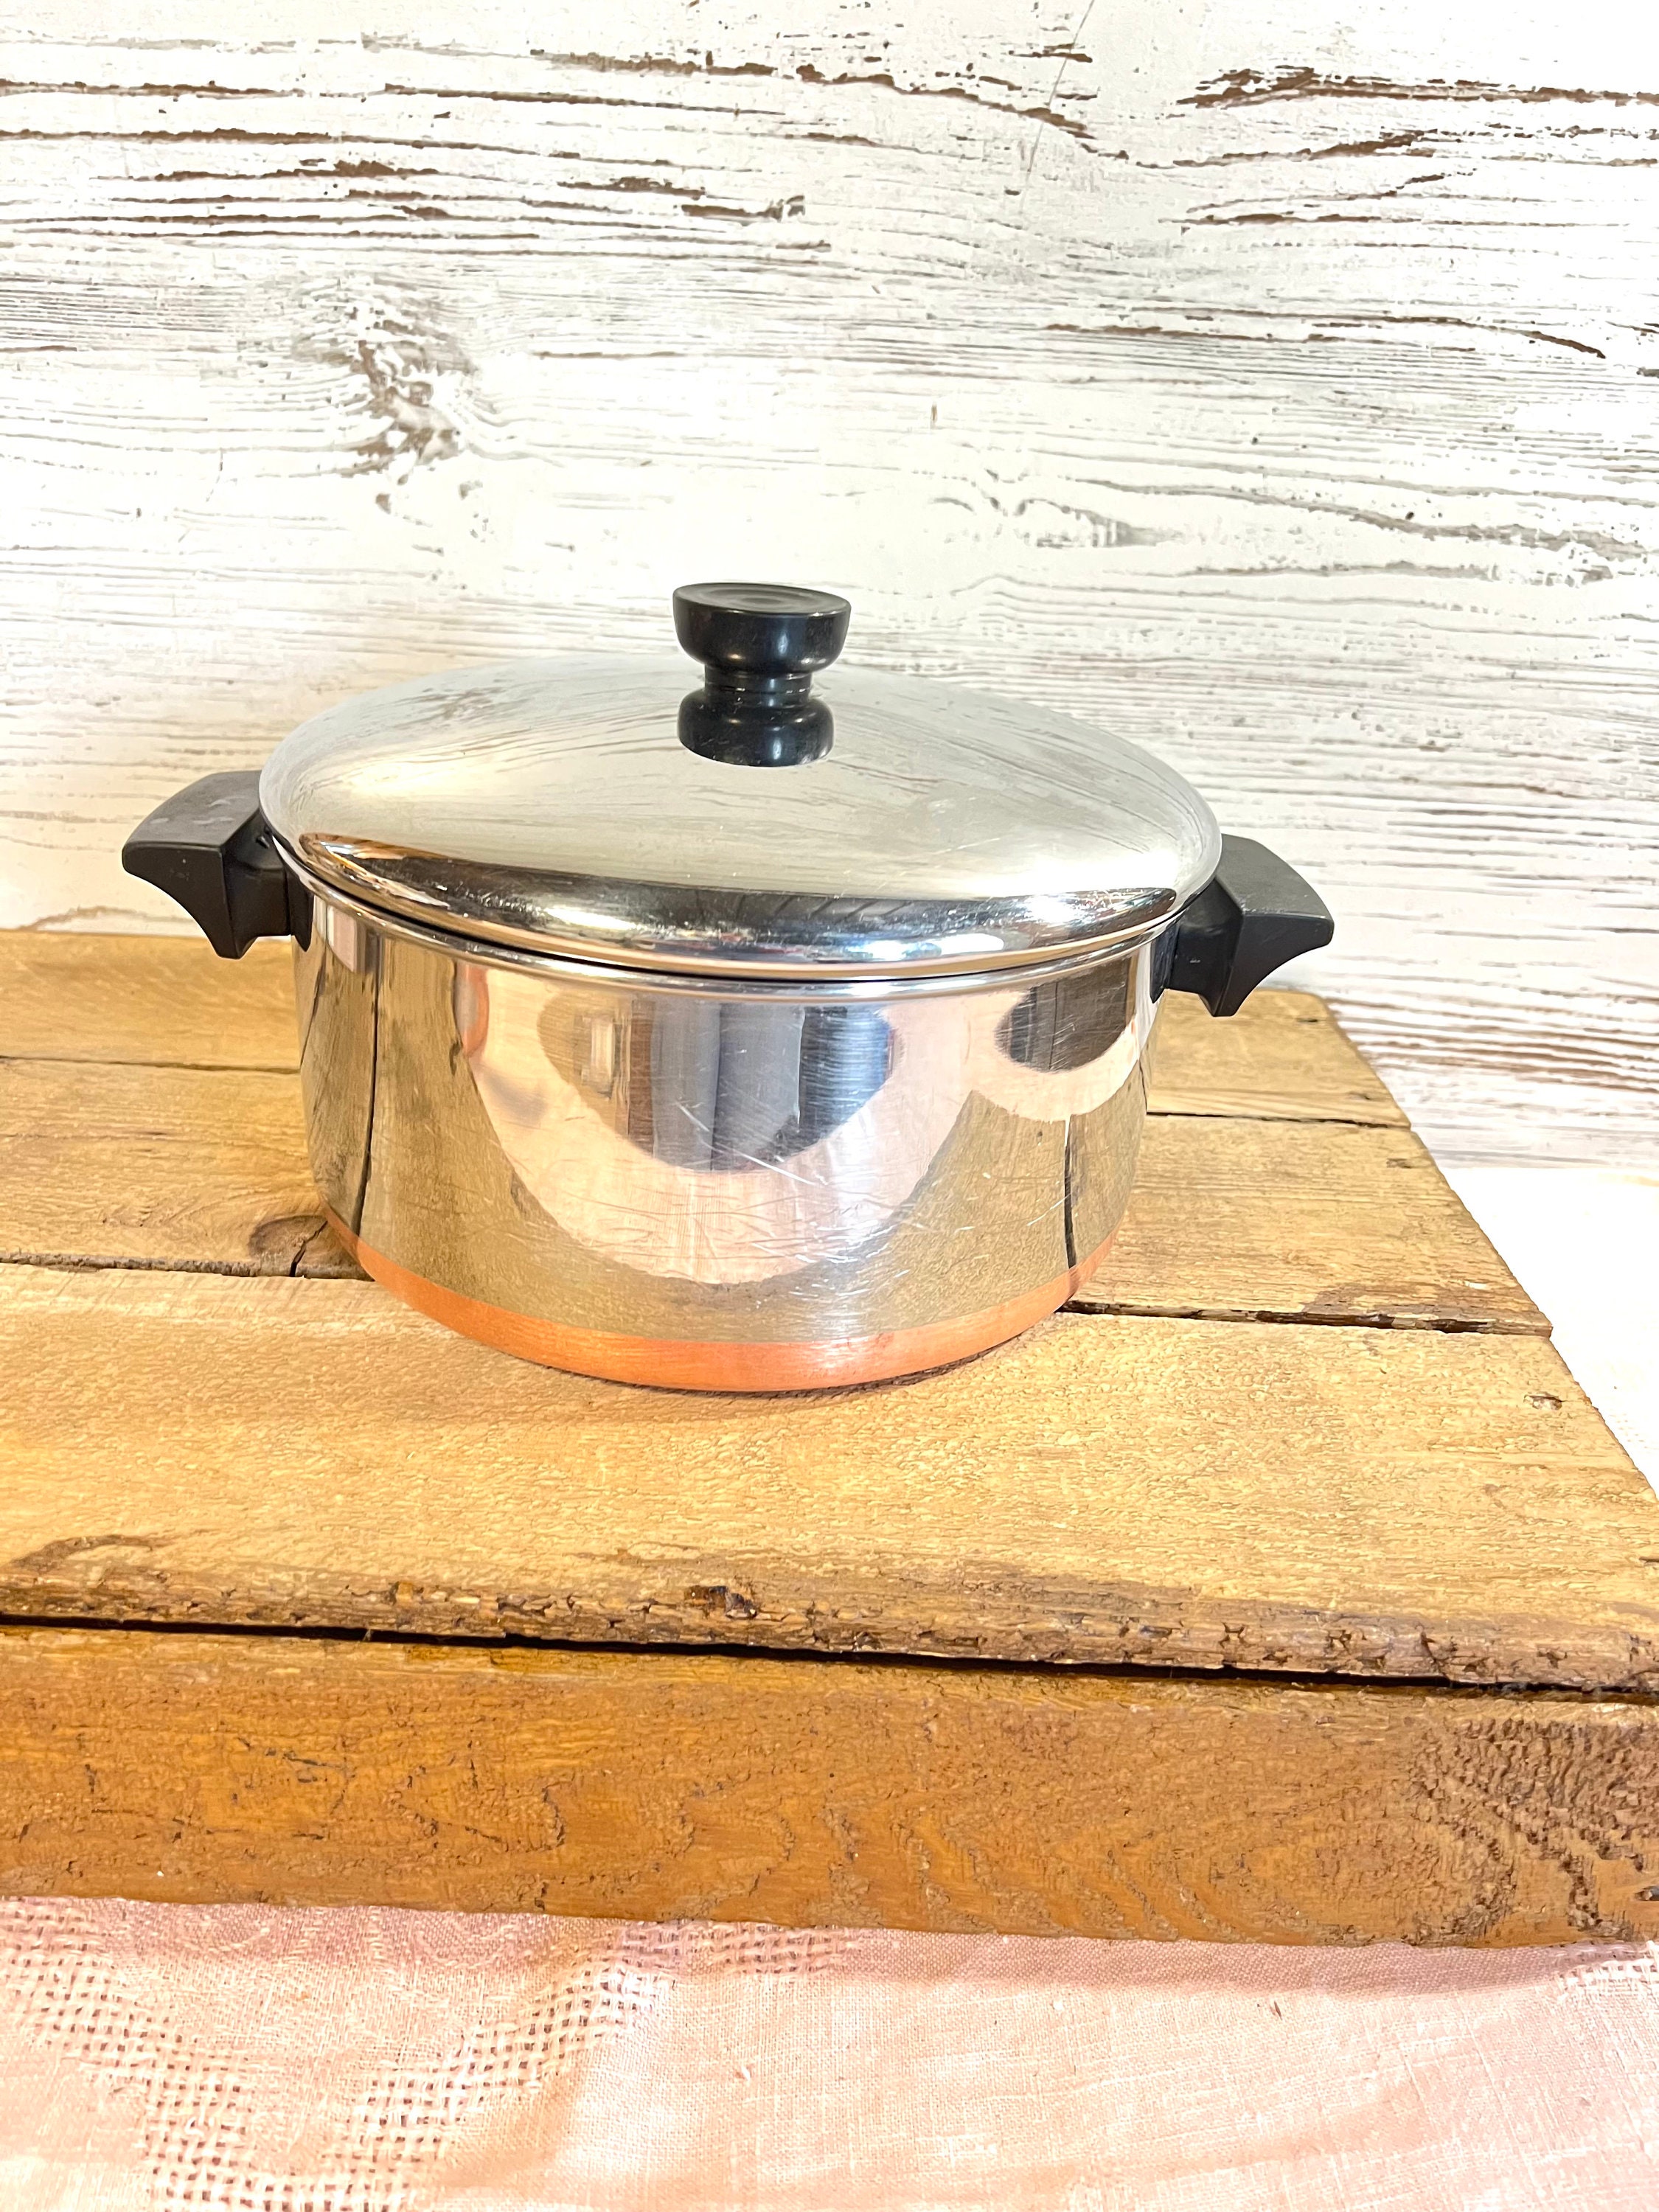 Revere Ware Vtg Cookware 7 piece Copper Bottom Pot Set